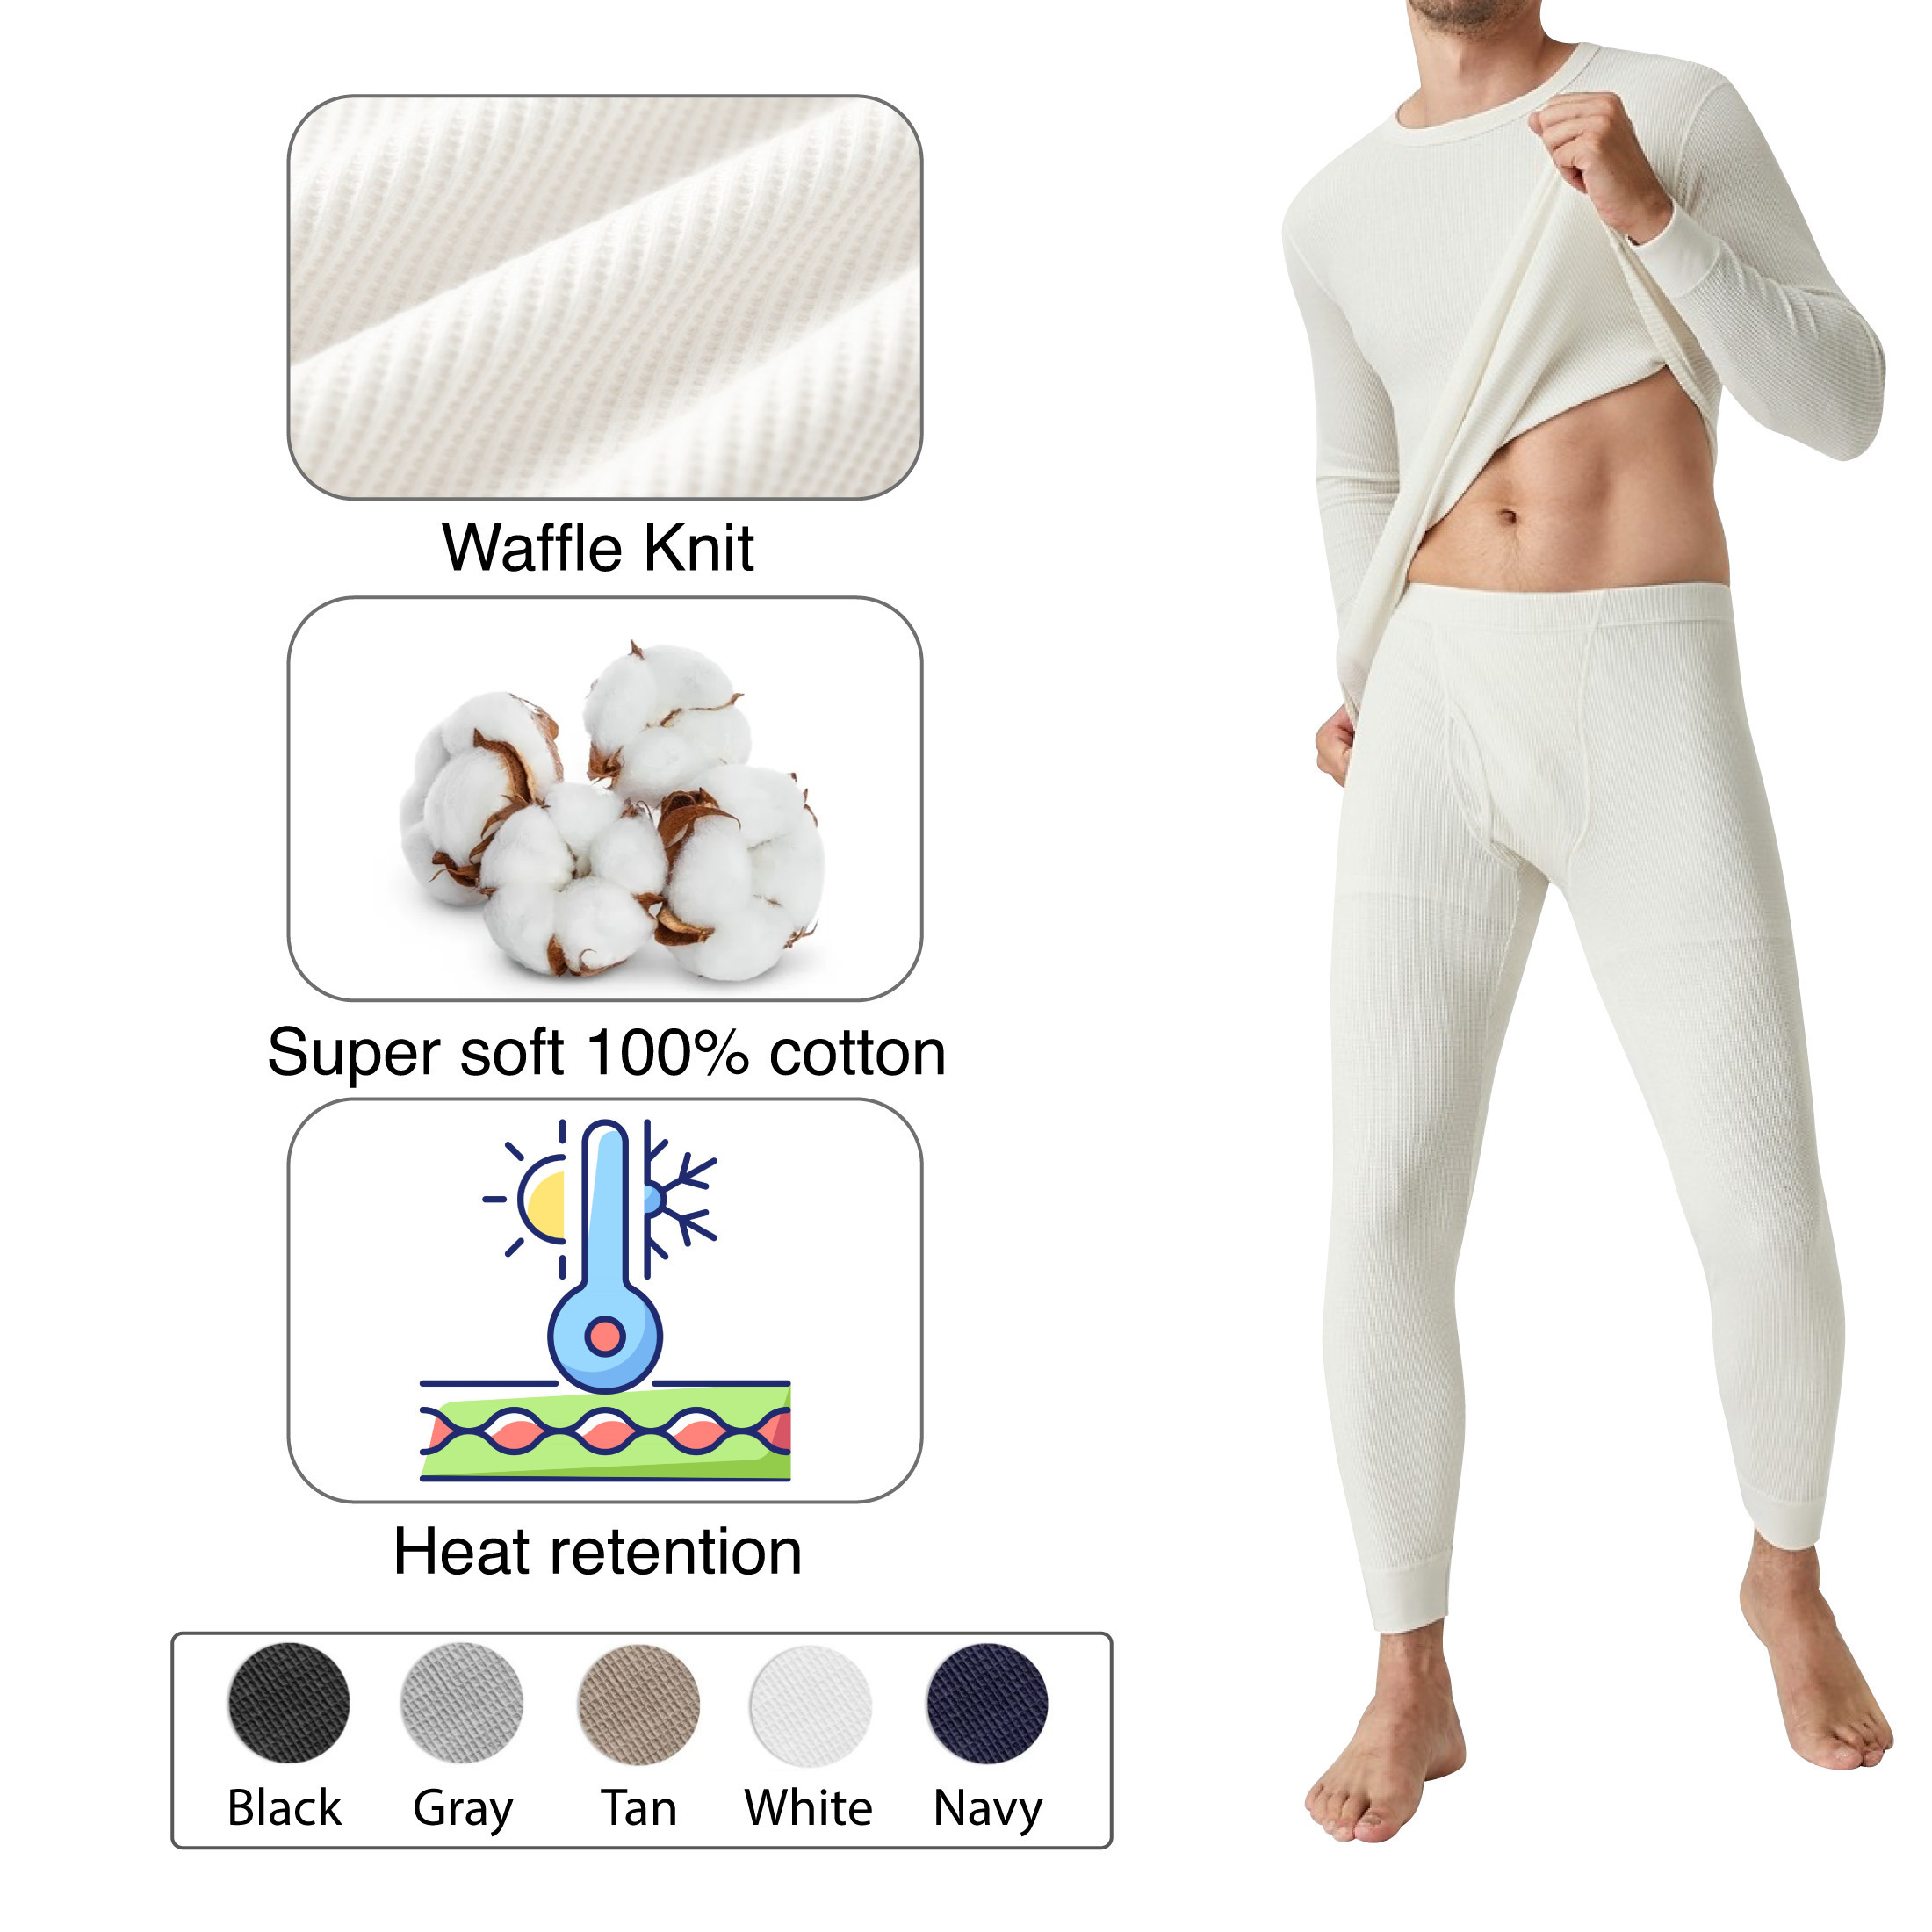 2-Piece: Men's Super Soft Cotton Waffle Knit Winter Thermal Underwear Set - Charcoal, Medium